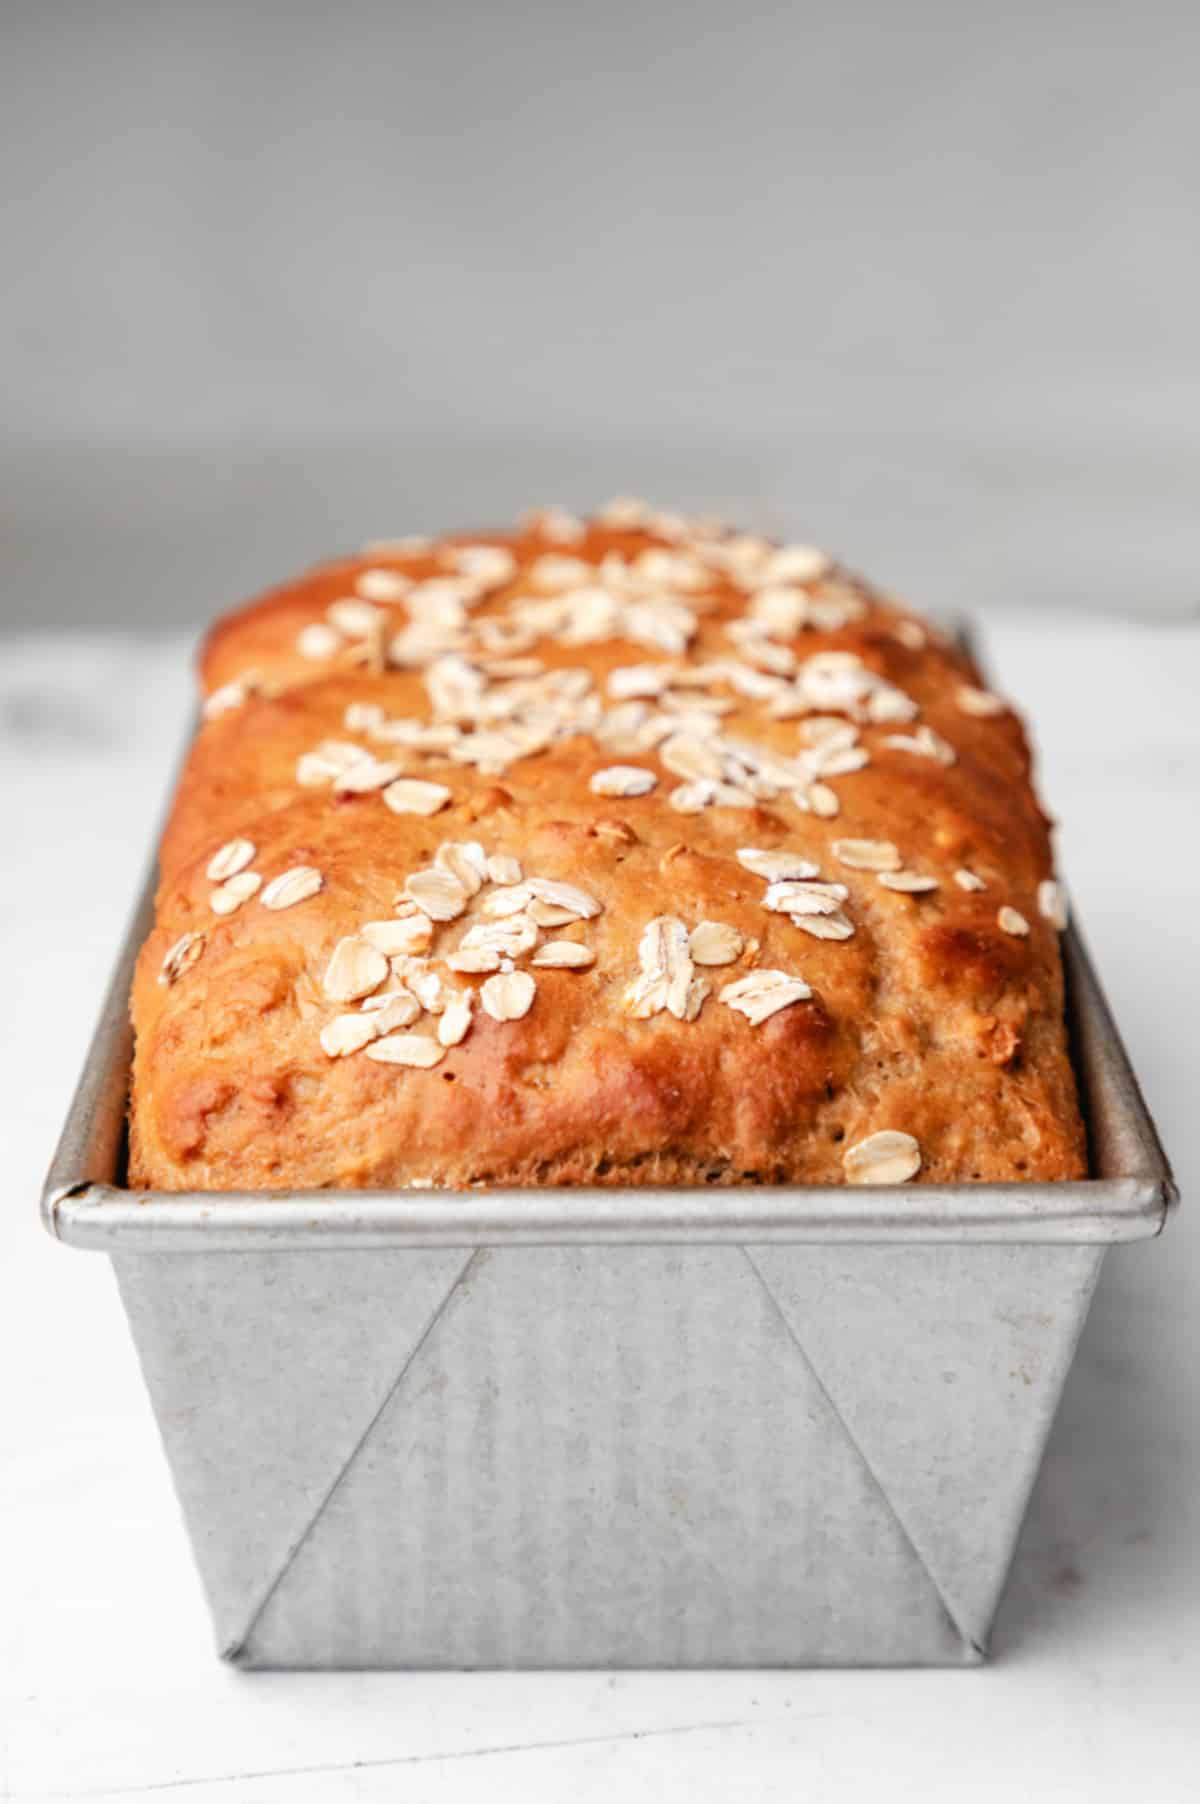 A baked loaf of honey oat bread in a bread pan.